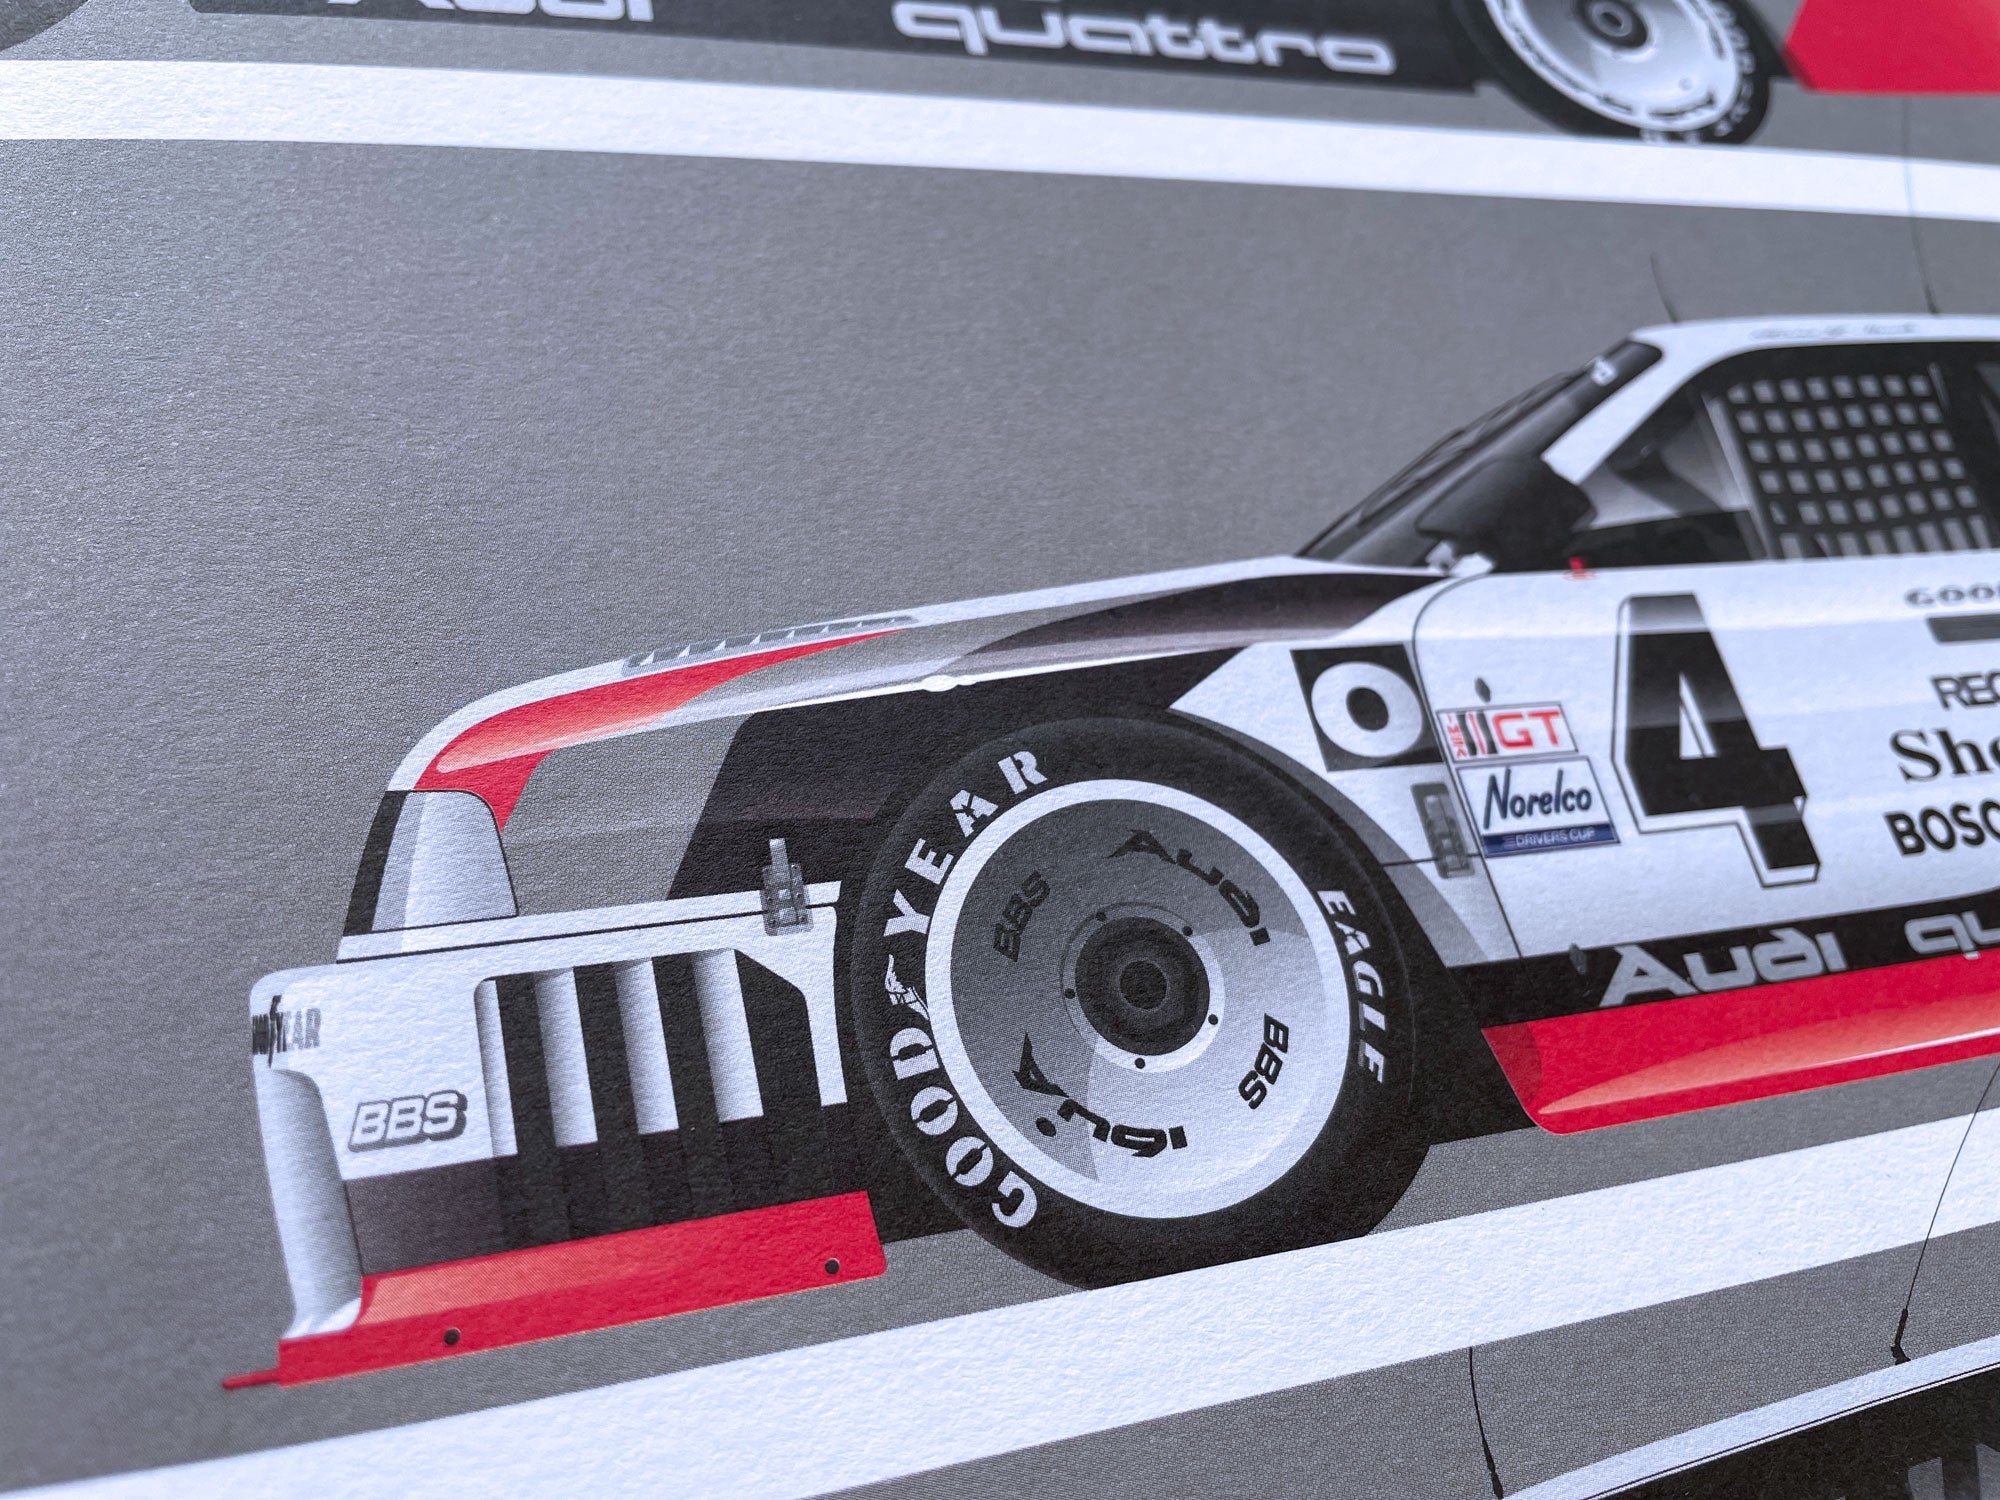 Audi Quattro on Track Short Graphic Story